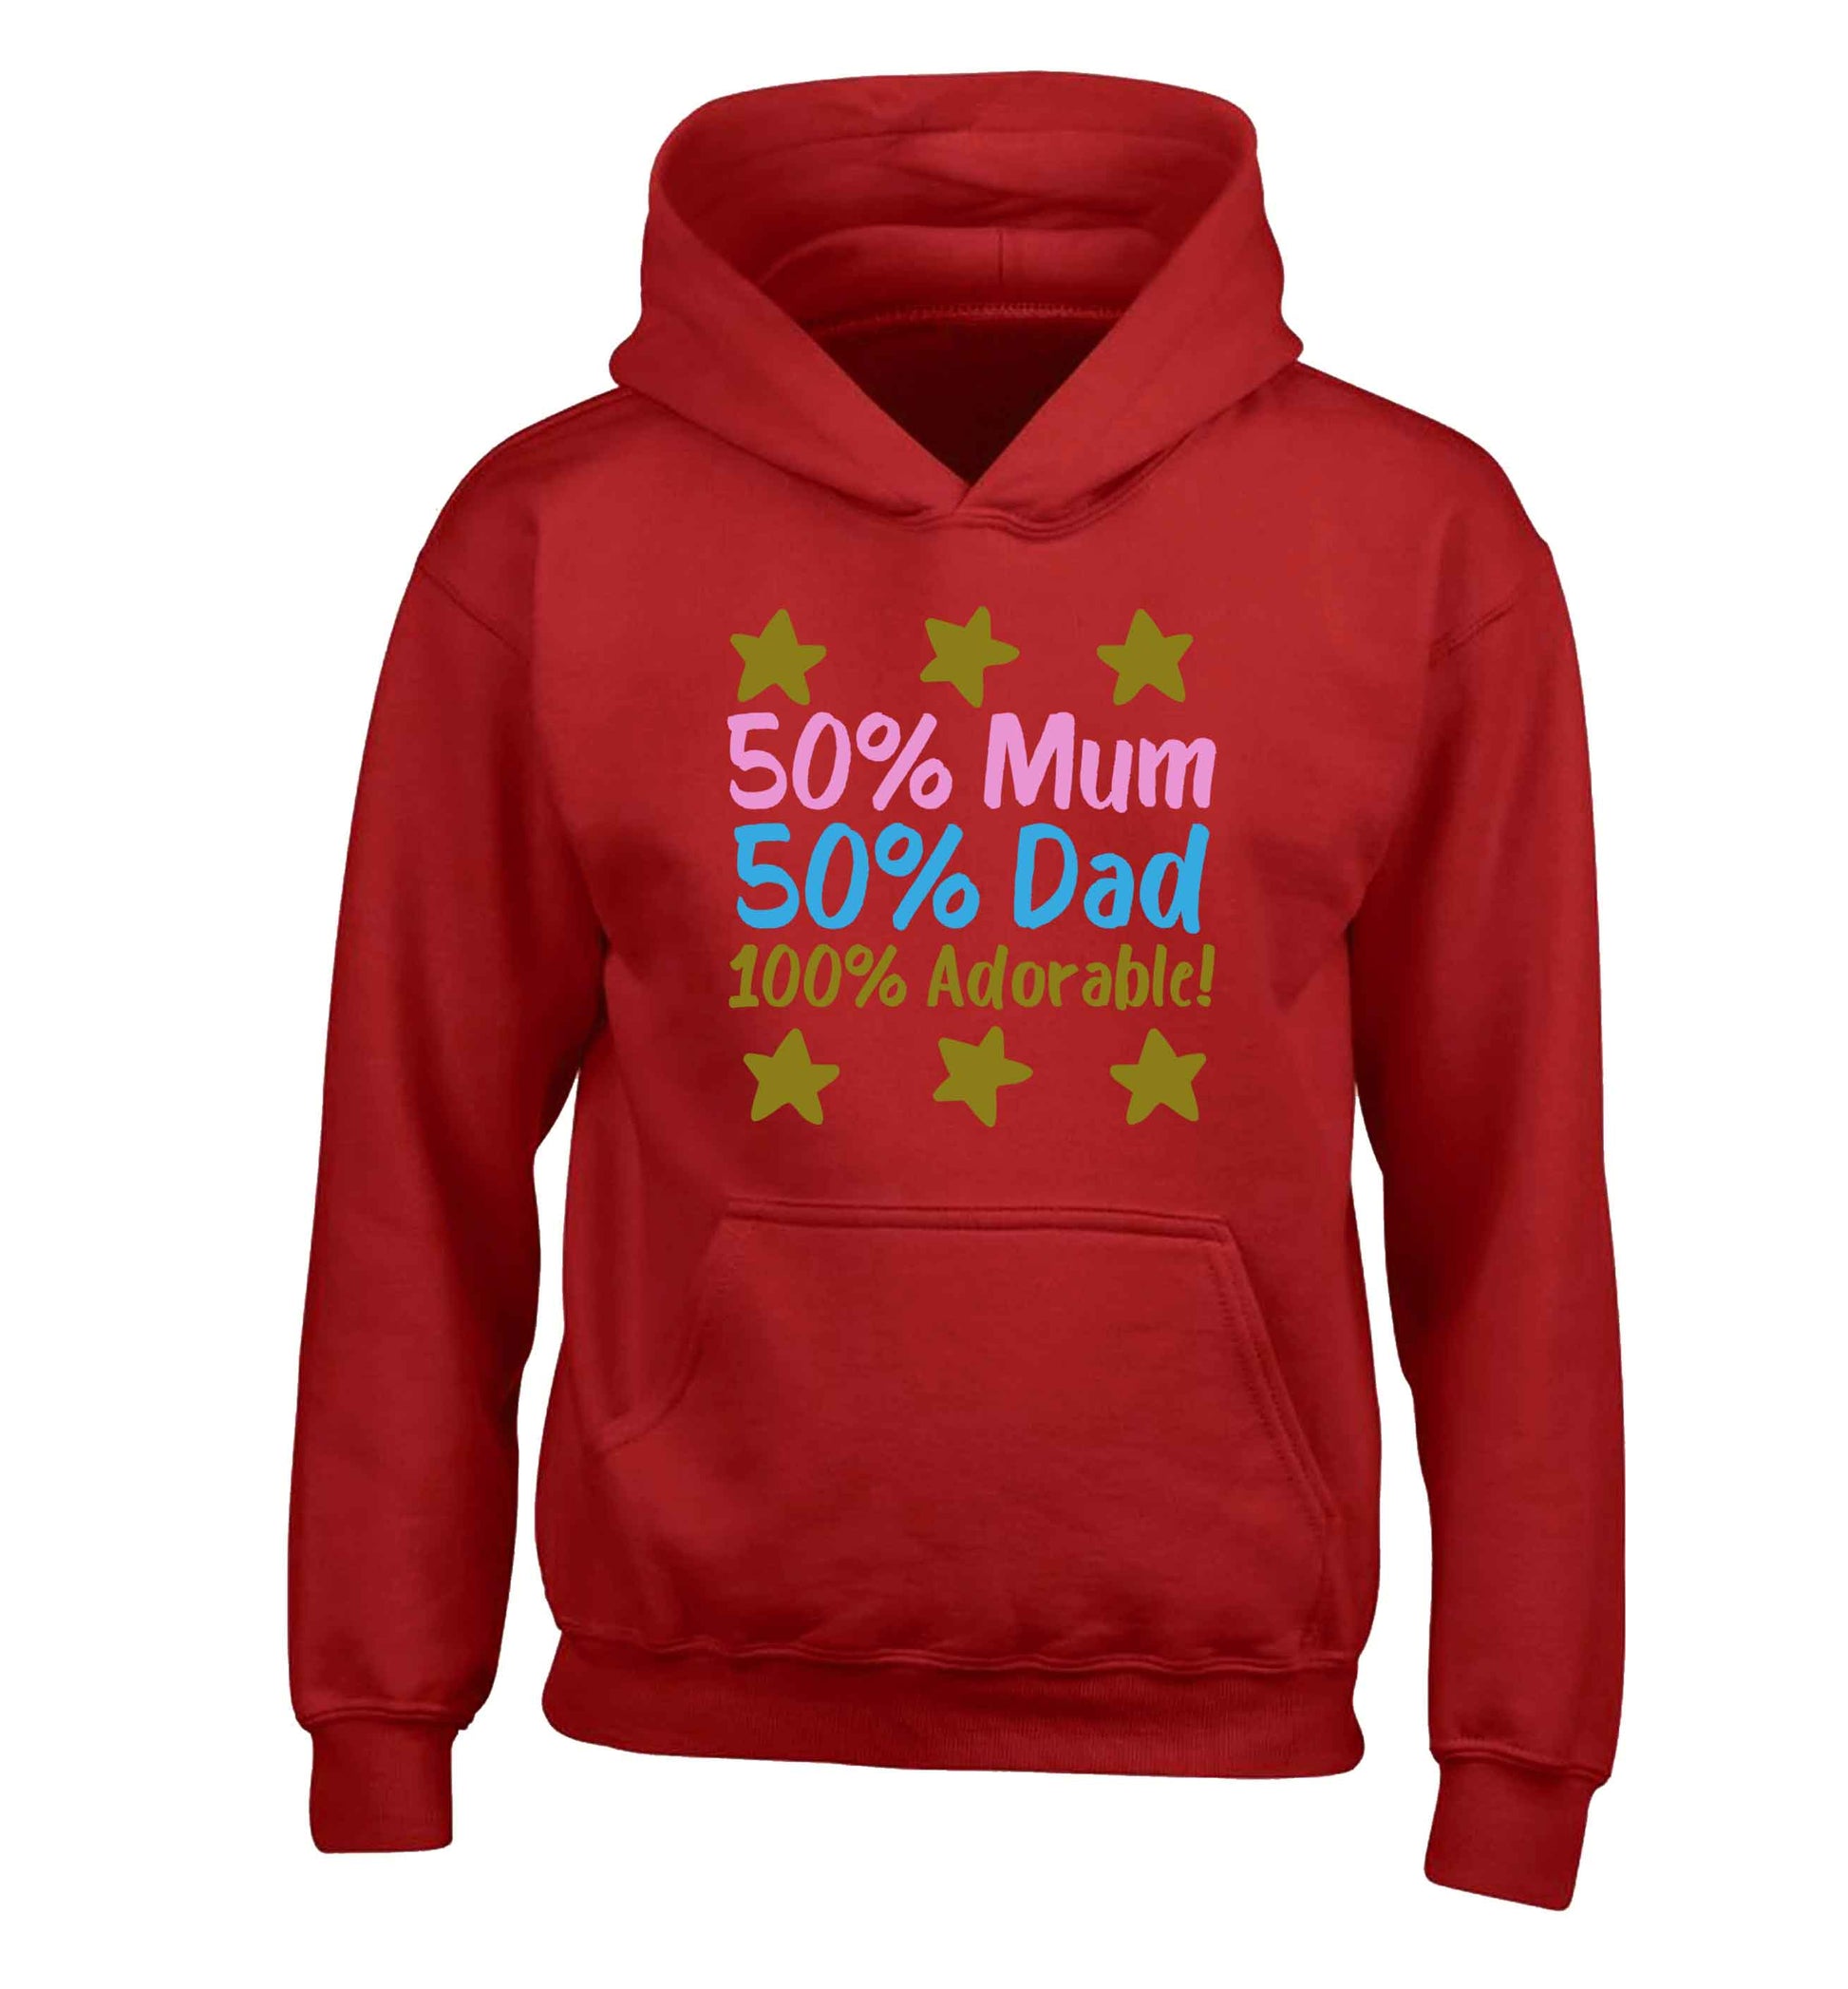 50% mum 50% dad 100% adorable children's red hoodie 12-13 Years